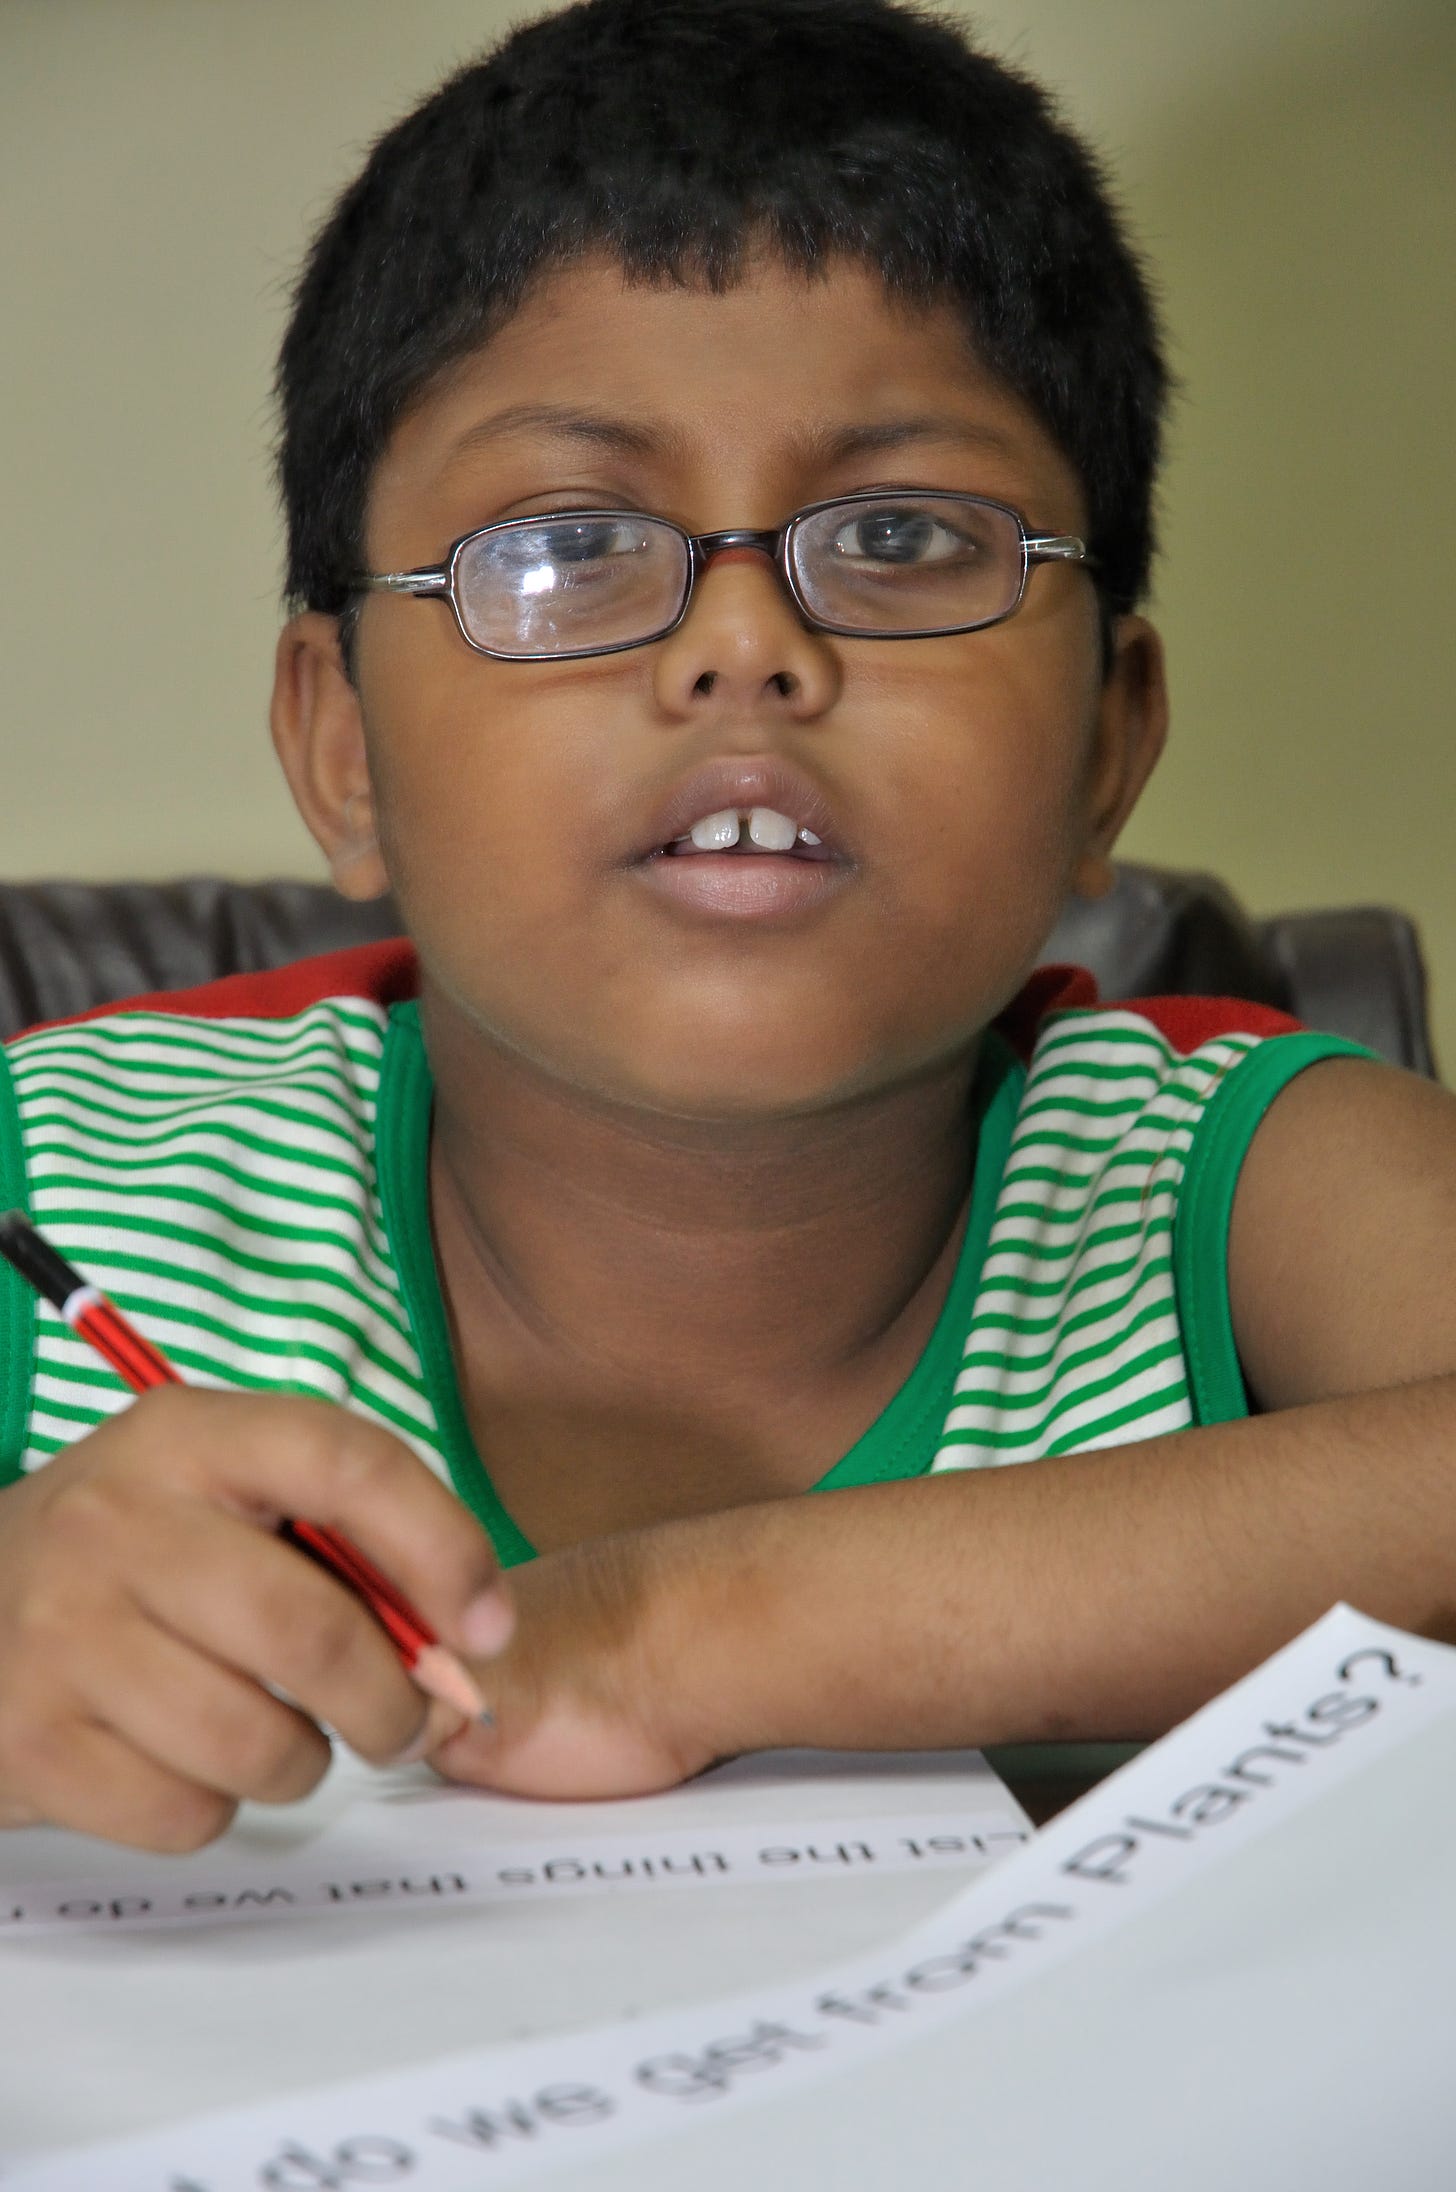 File:Indian Boy Child 4975.JPG - Wikimedia Commons